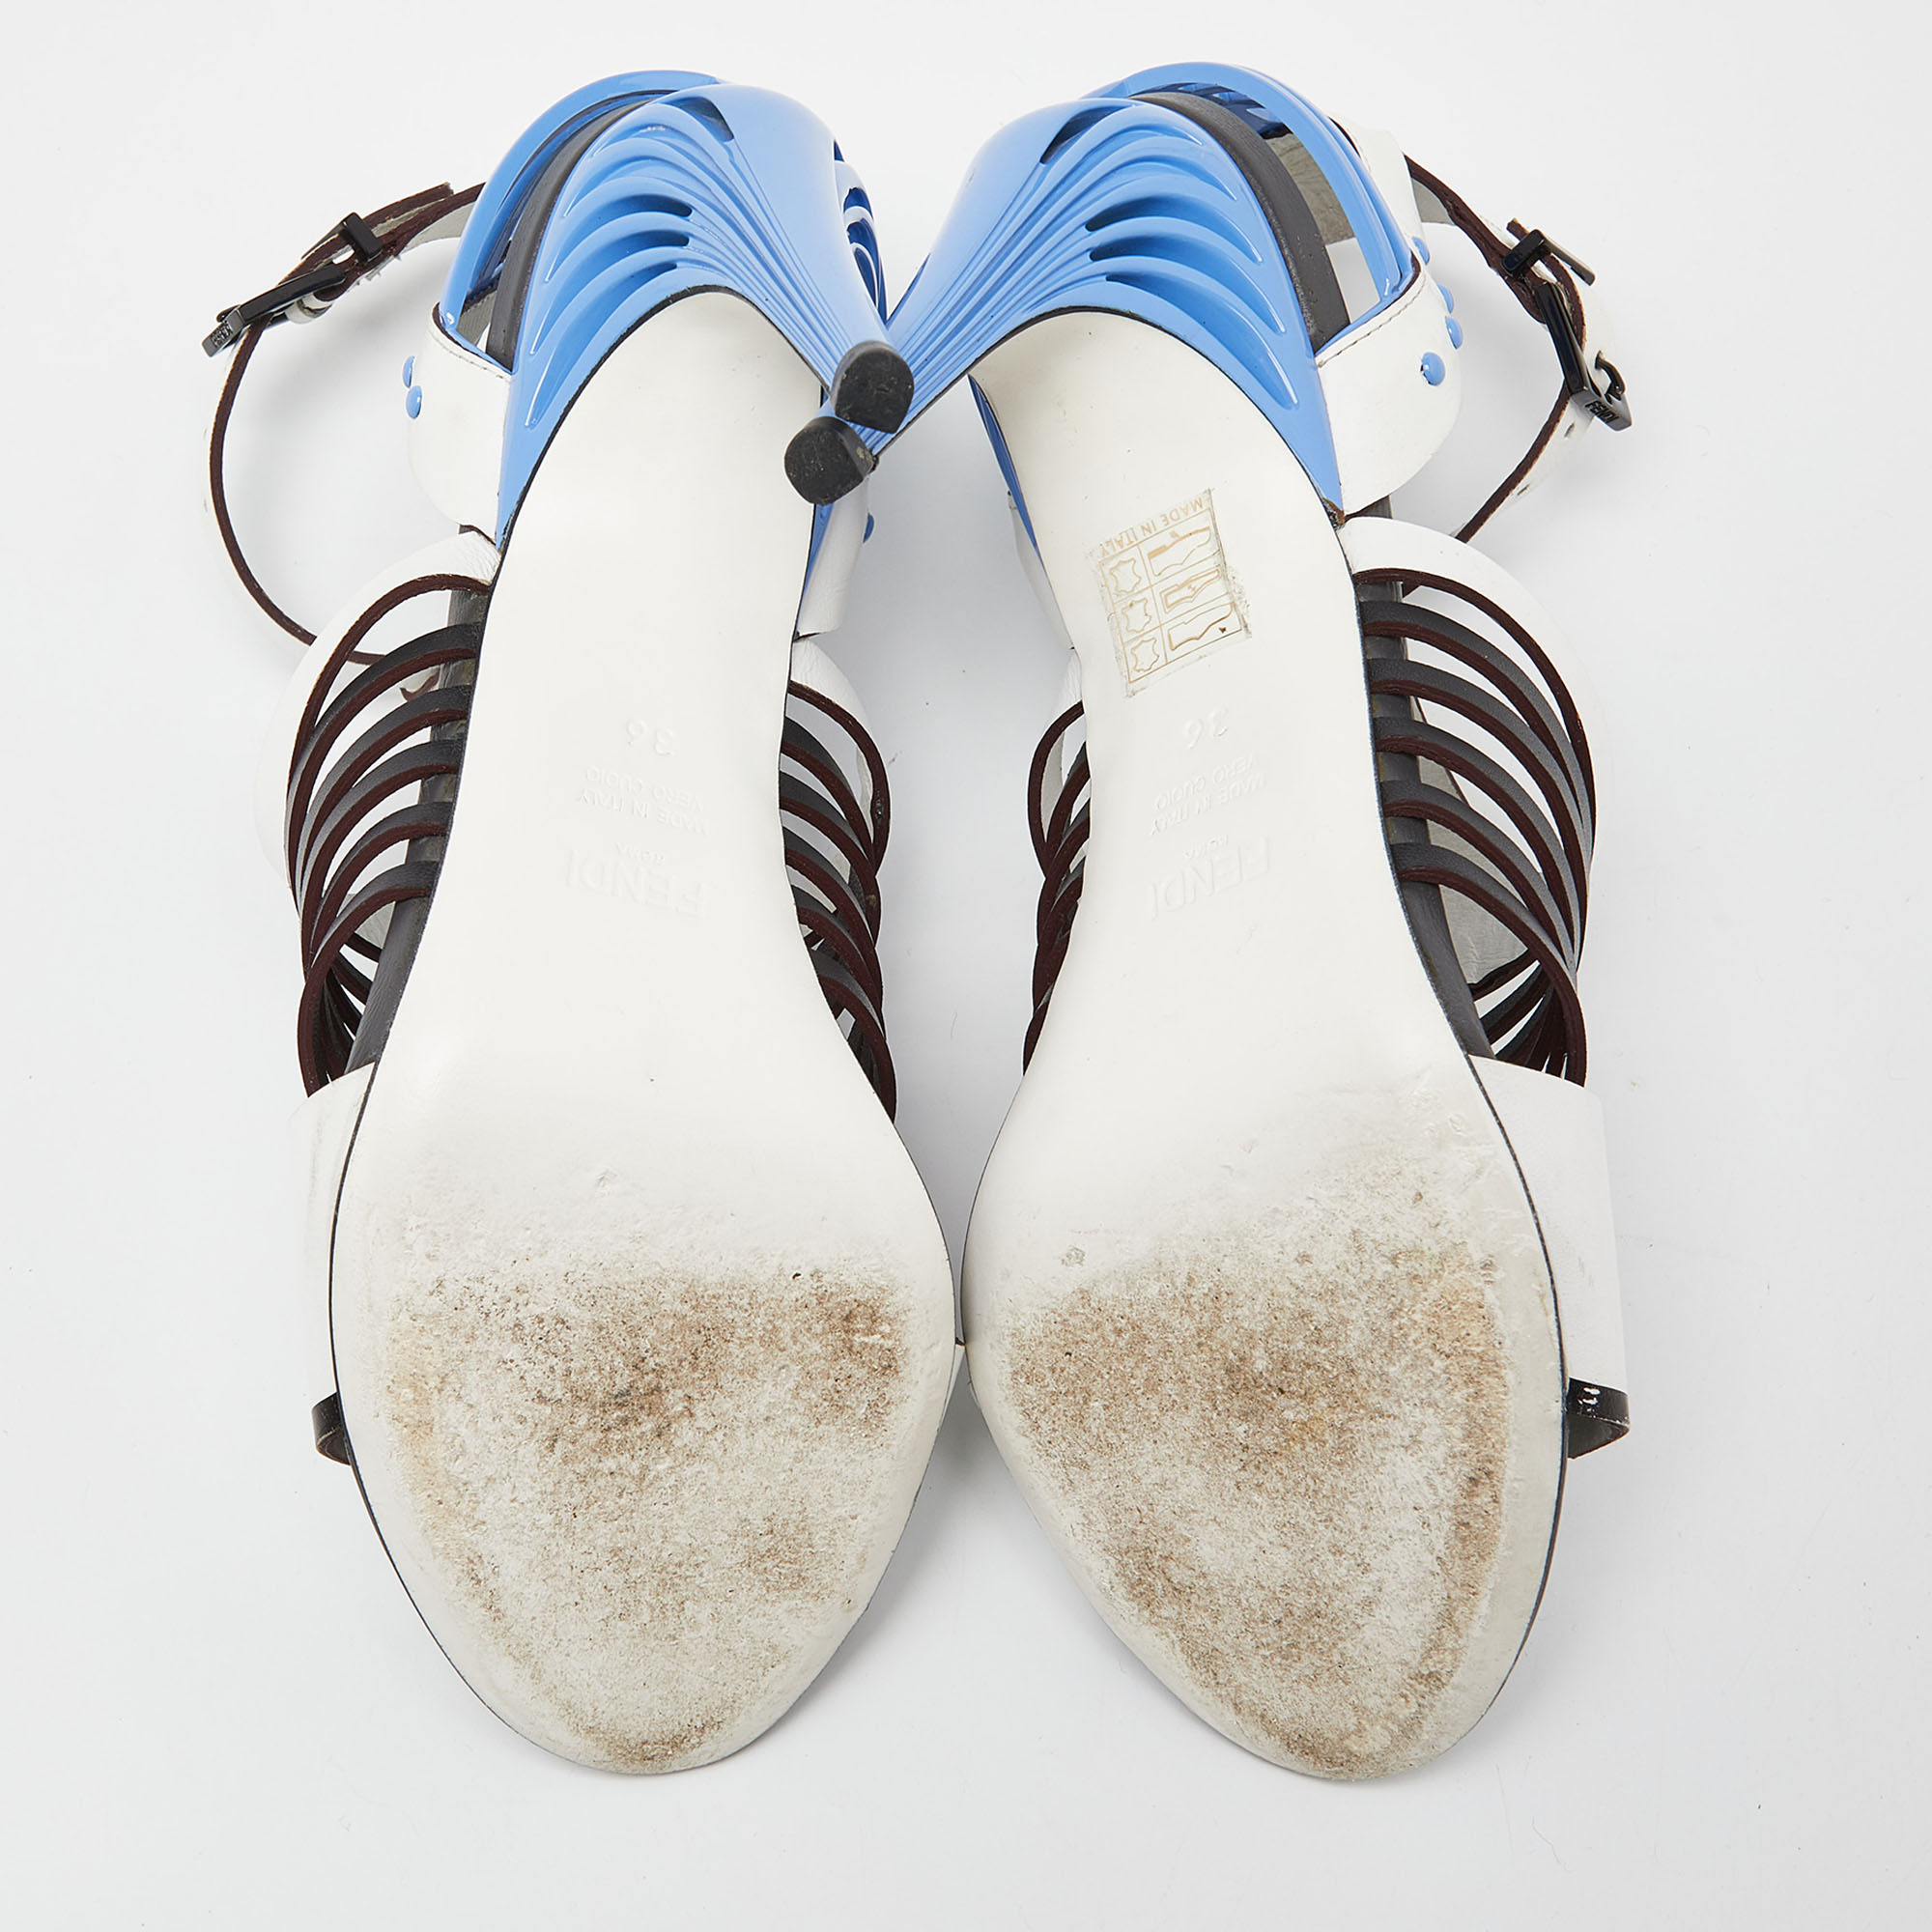 Fendi Tricolor Leather Strappy Sandals Size 36